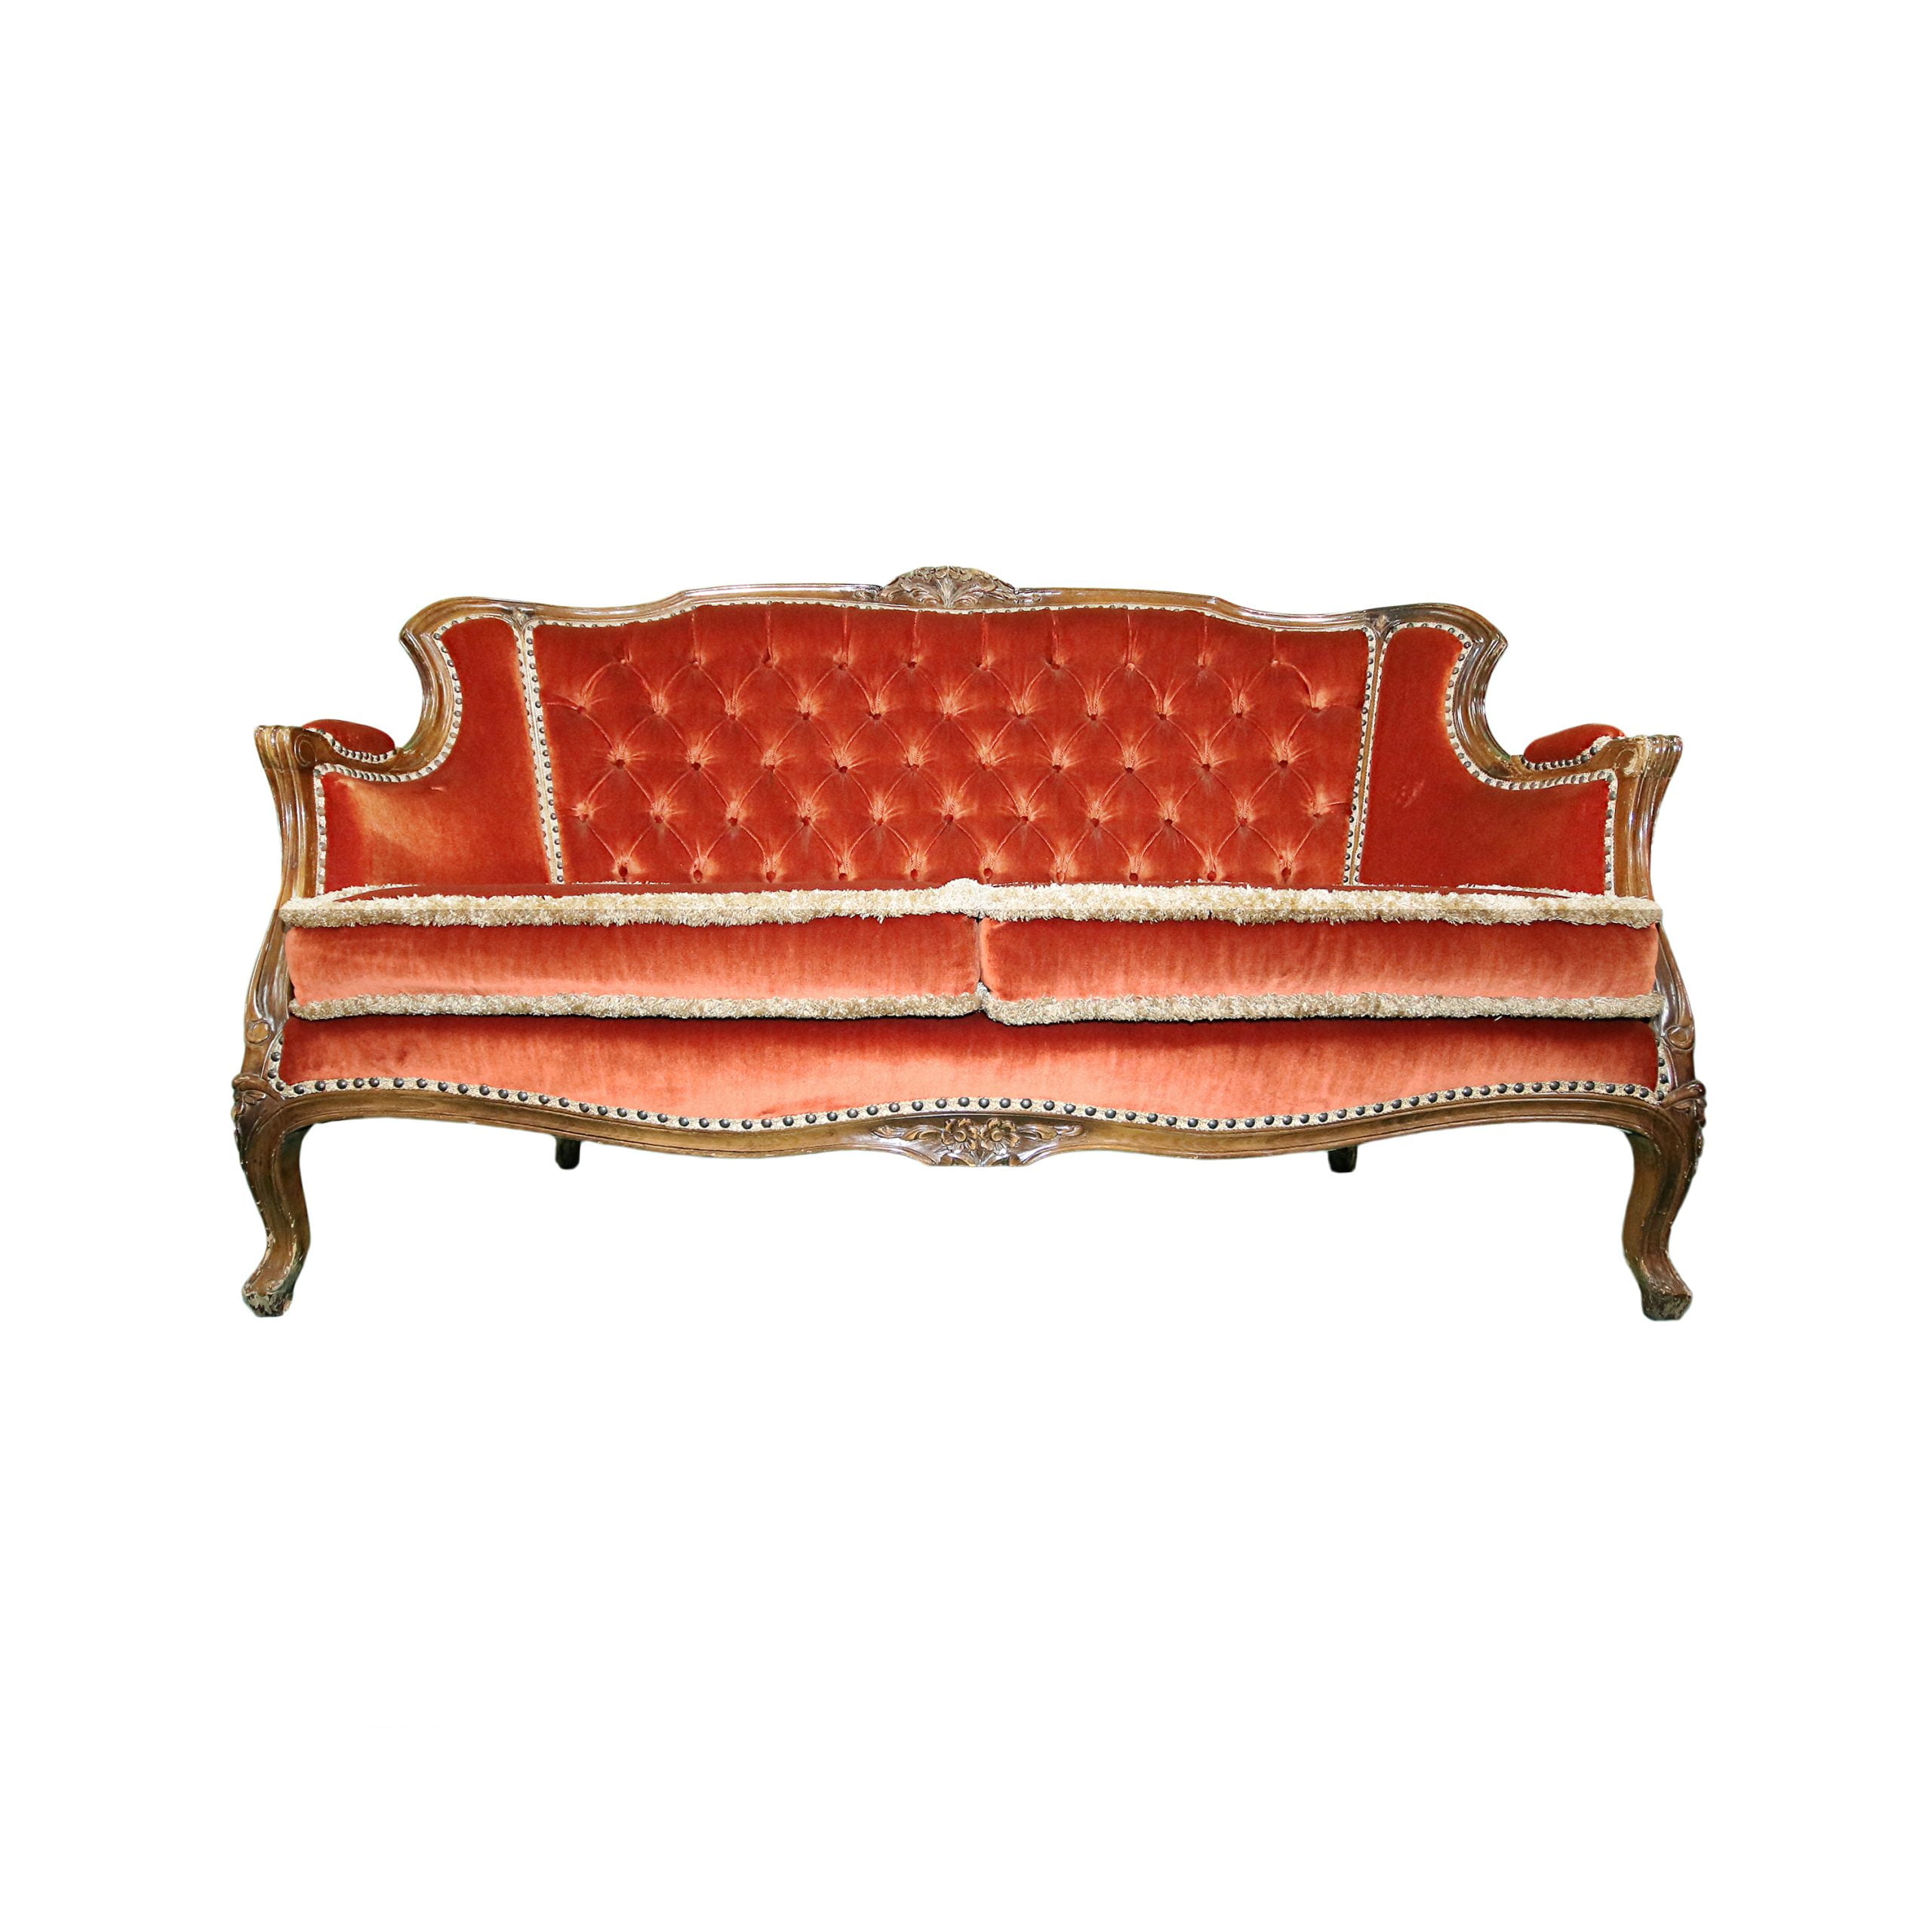 Carved Victorian sofa original